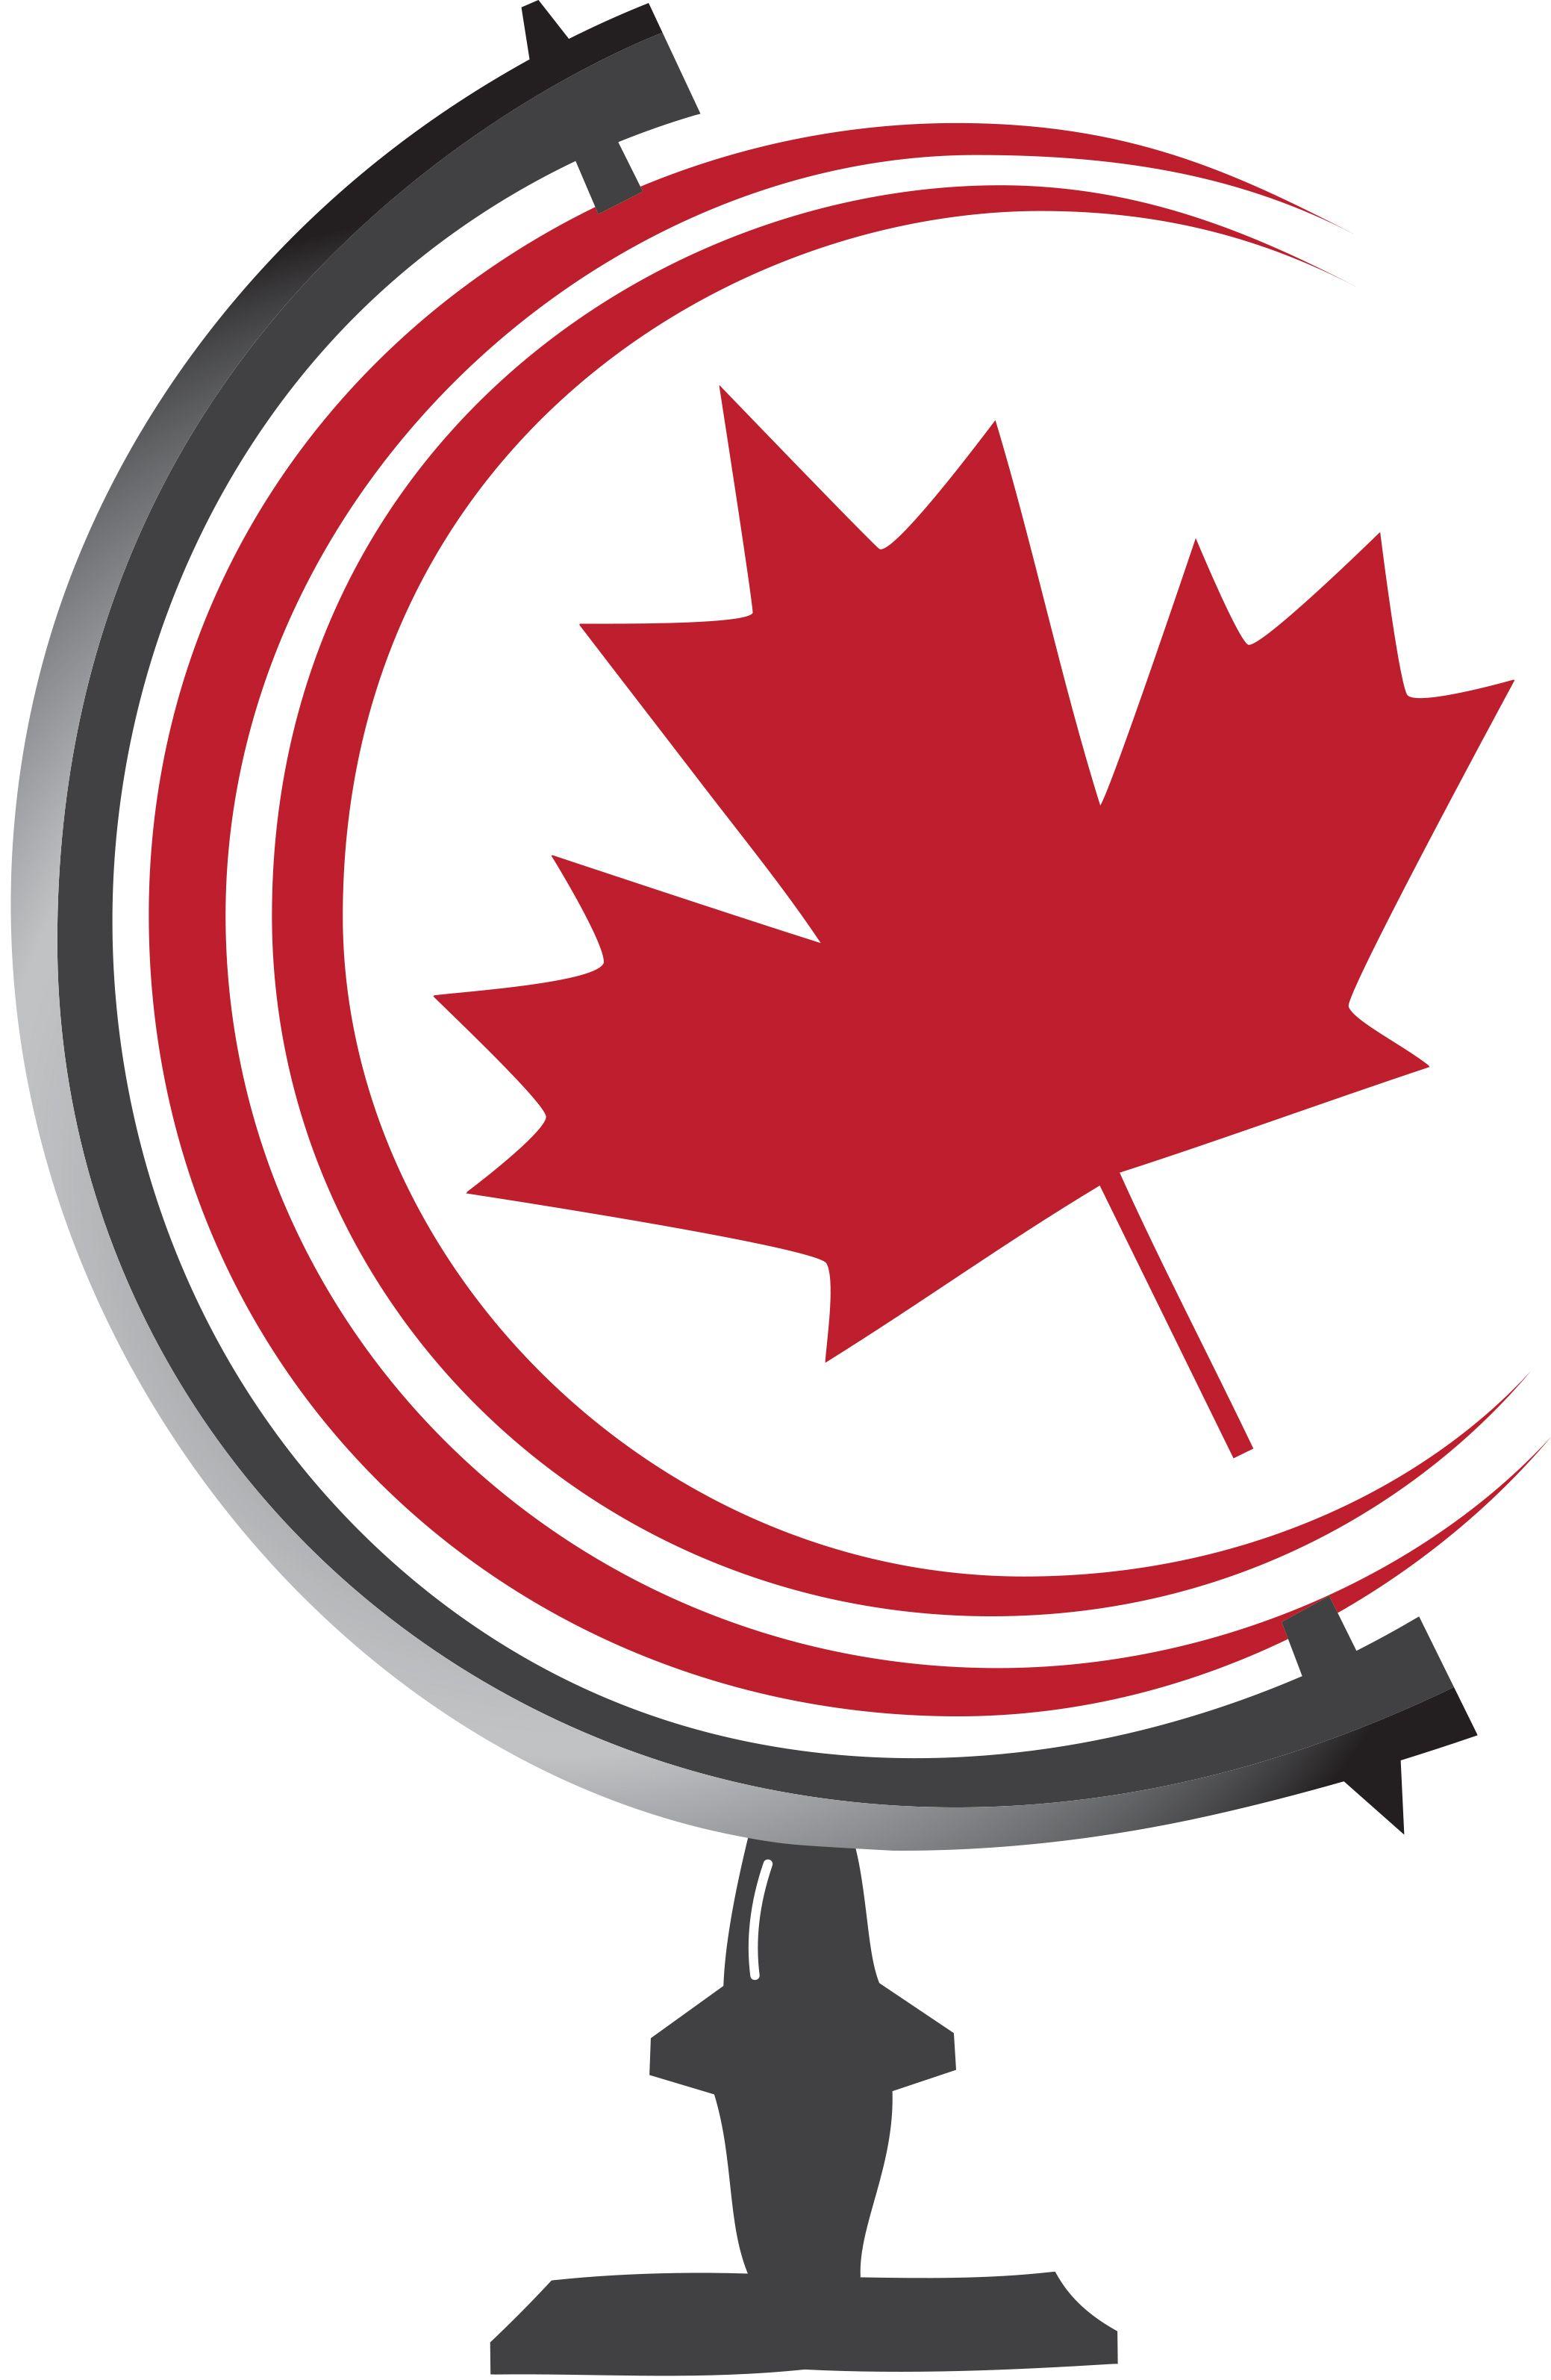 Red Maple Leaf Company Logo - CCAB » Calecorp International Ltd.